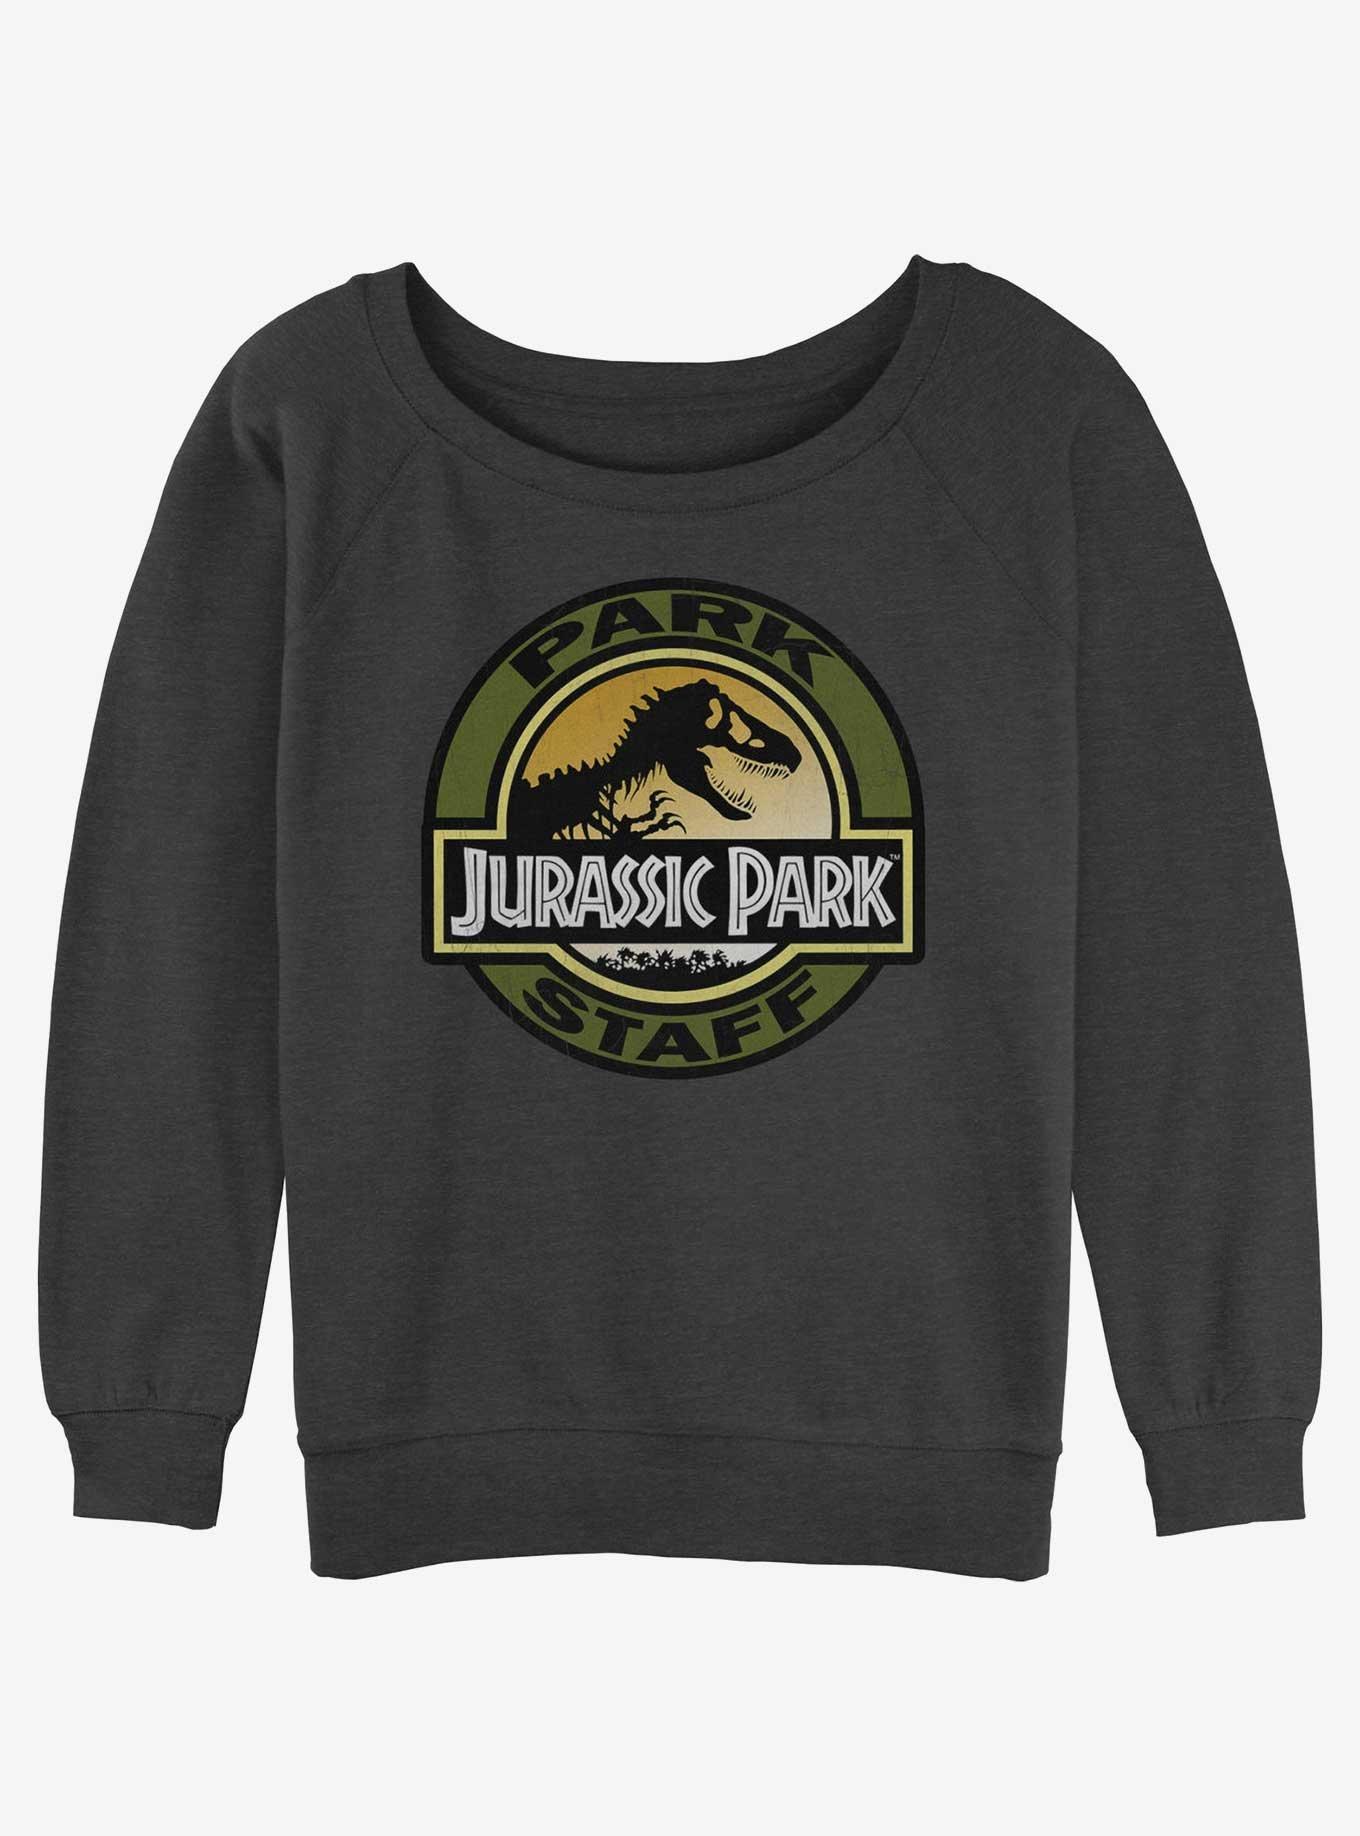 Jurassic Park Park Staff Womens Slouchy Sweatshirt, CHAR HTR, hi-res